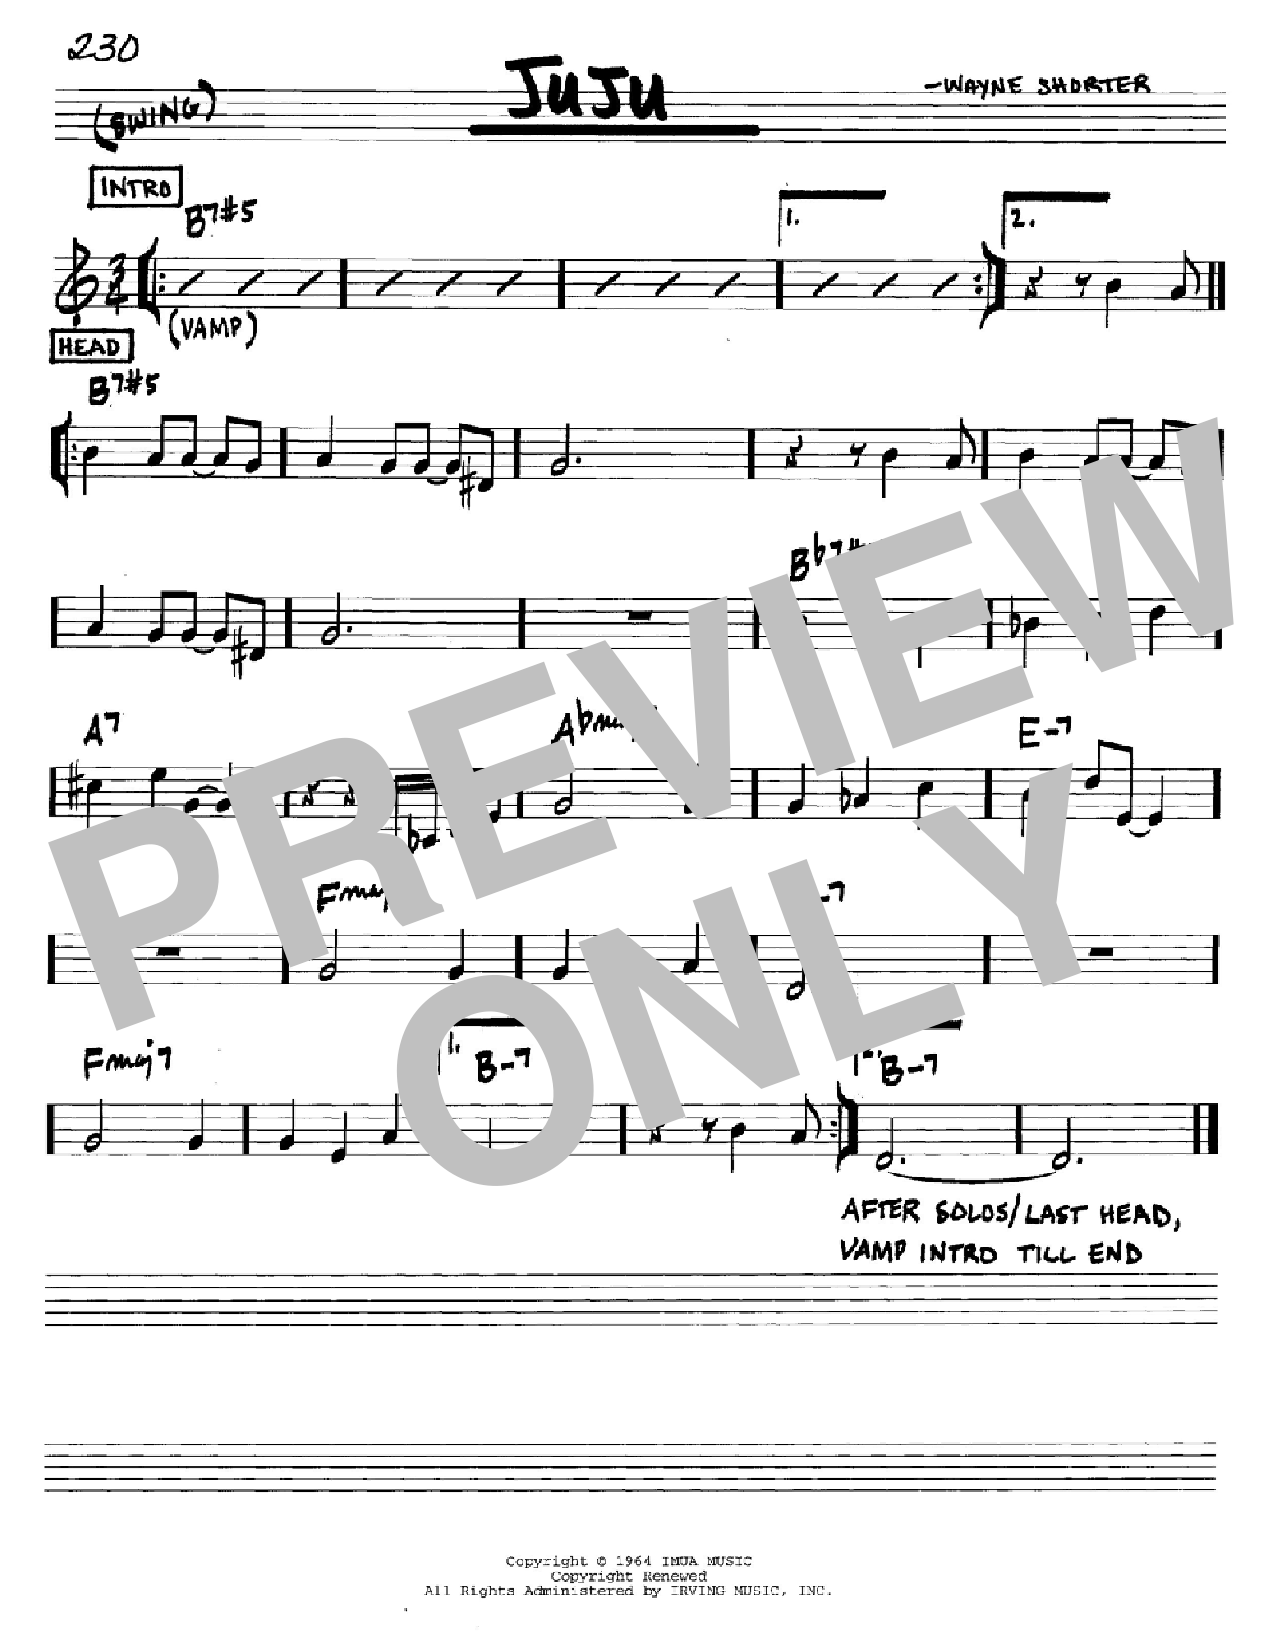 Wayne Shorter Juju Sheet Music Notes & Chords for Tenor Sax Transcription - Download or Print PDF